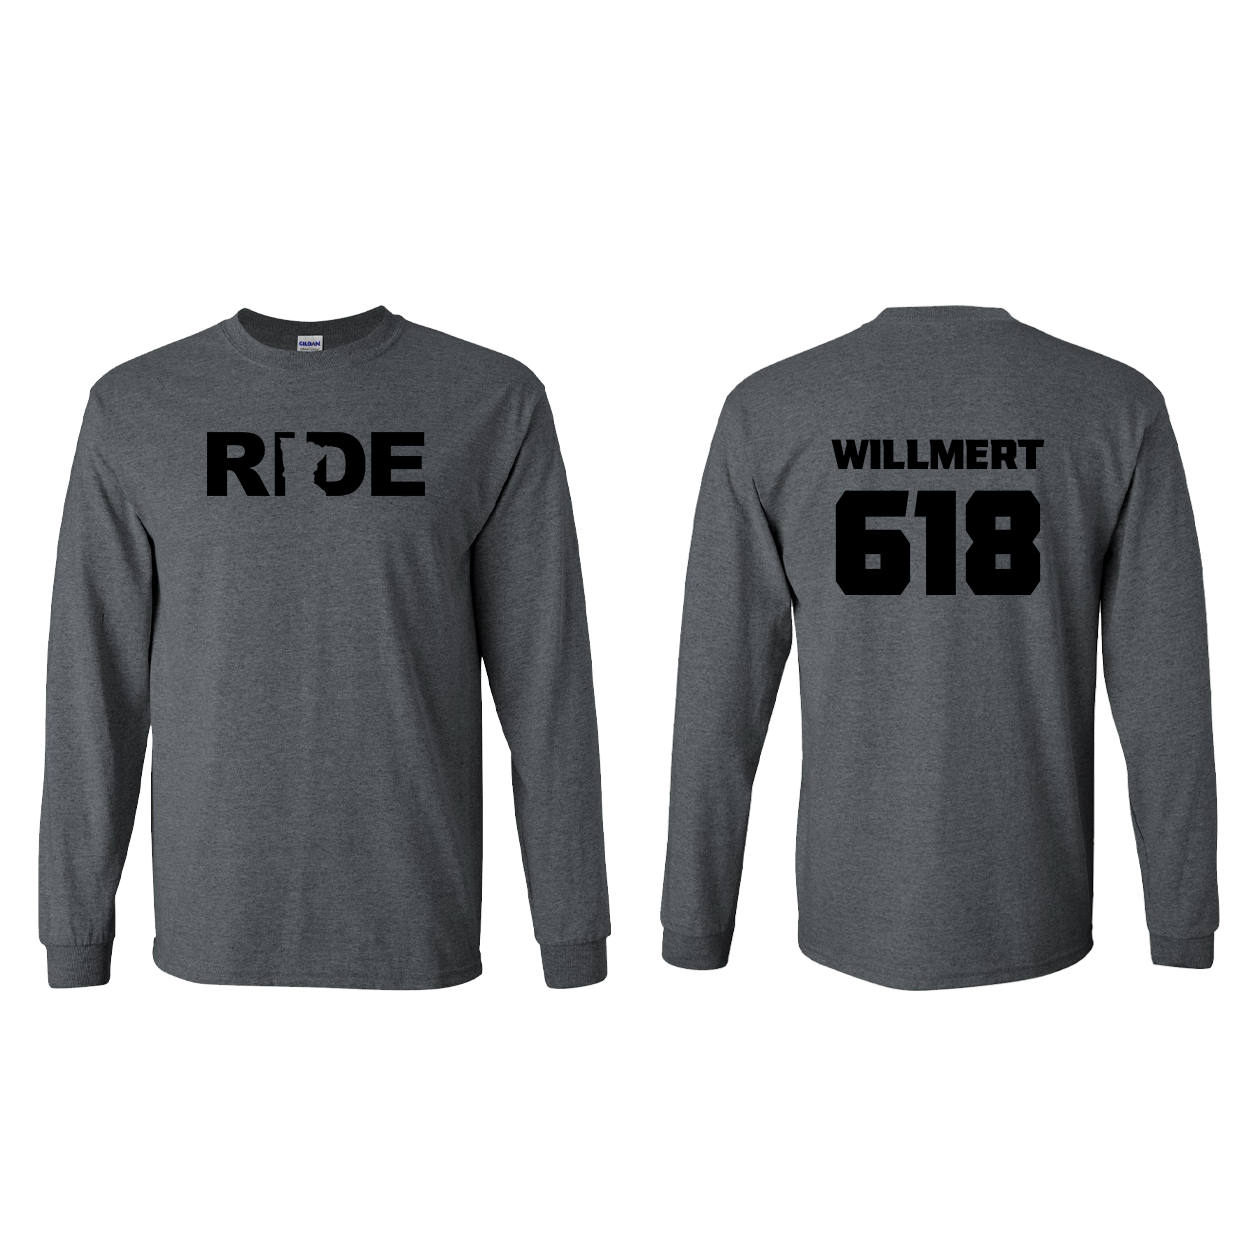 FXR BMX Race Team Classic Athlete Support Long Sleeve Shirt N. WILLMERT #618 Dark Heather (Black Logo)